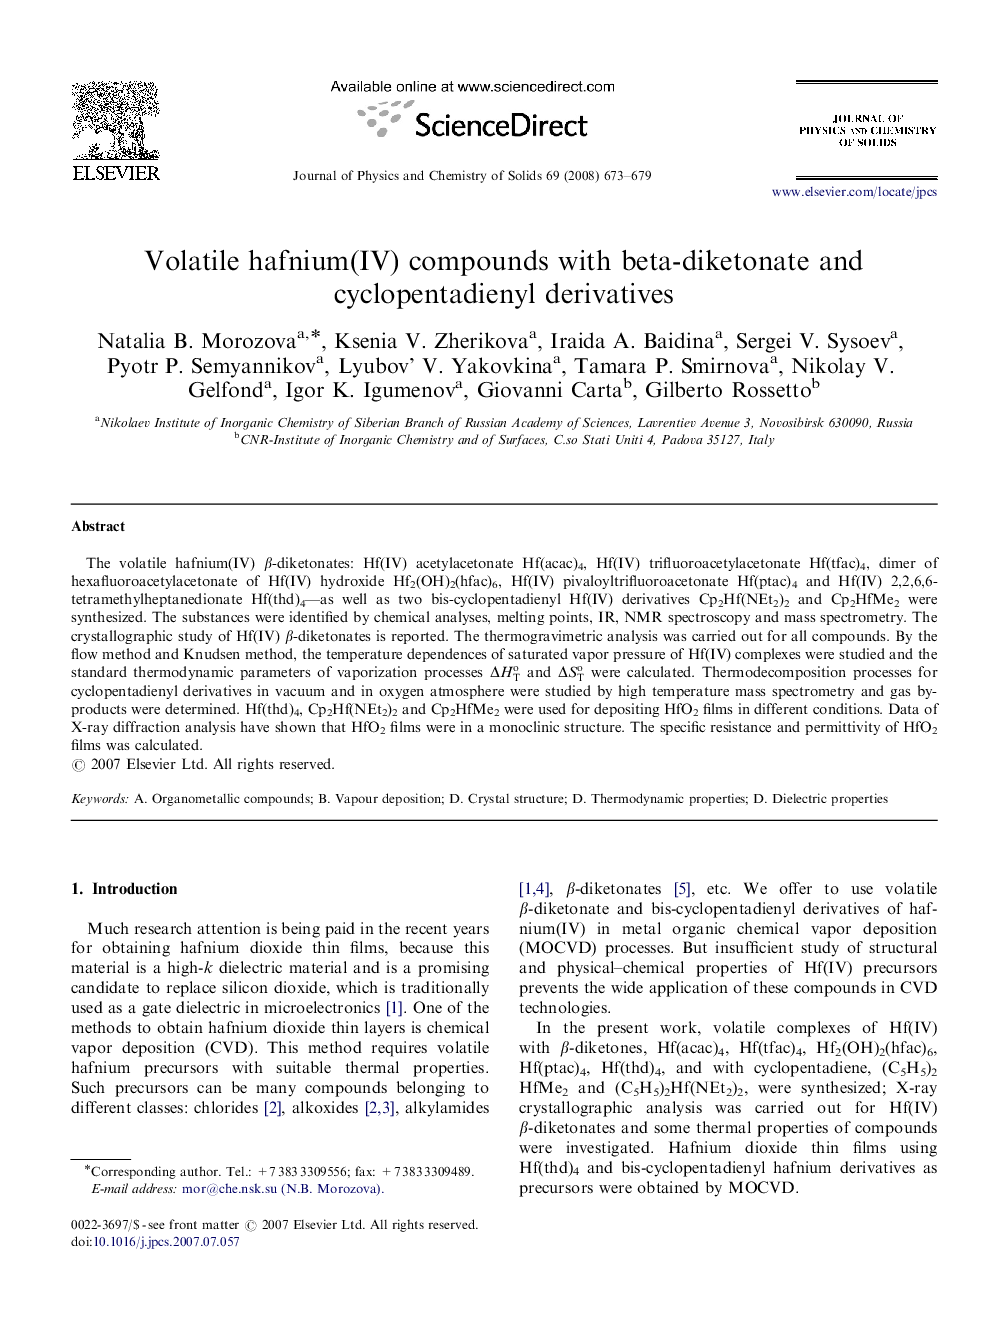 Volatile hafnium(IV) compounds with beta-diketonate and cyclopentadienyl derivatives